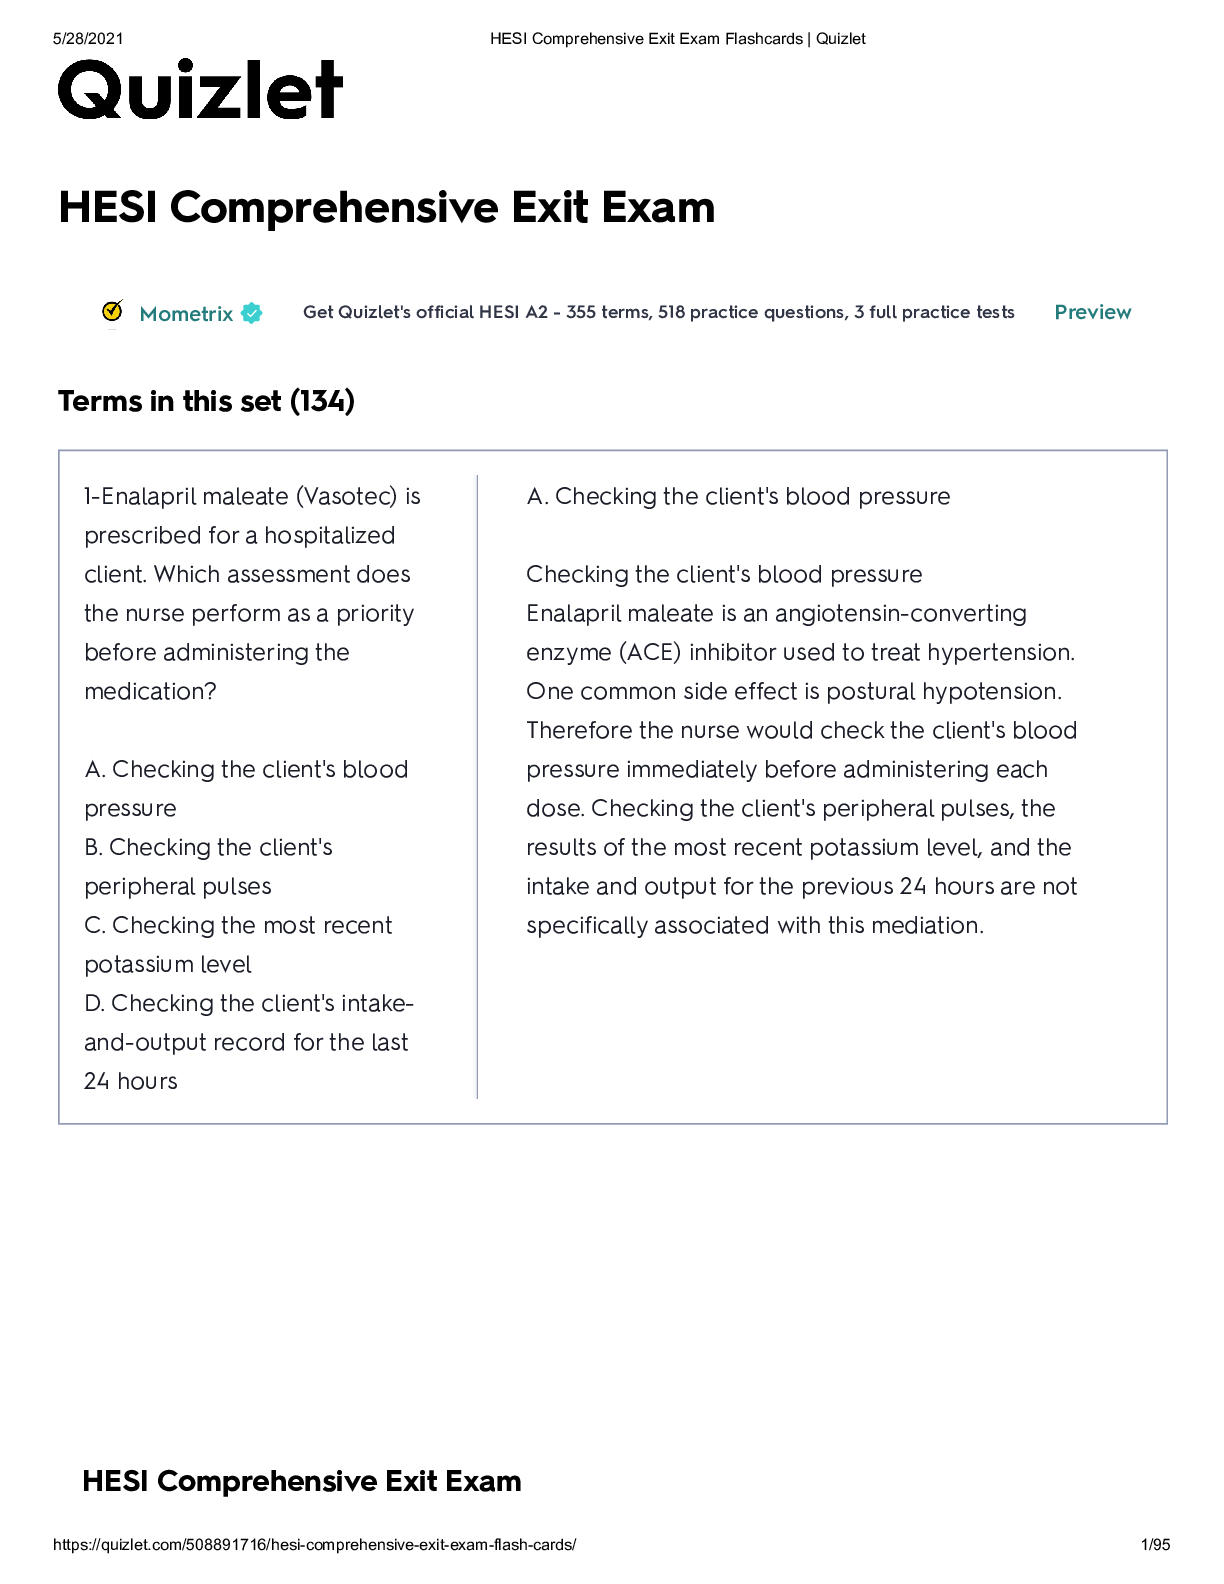 HESI Comprehensive Exit Exam Browsegrades